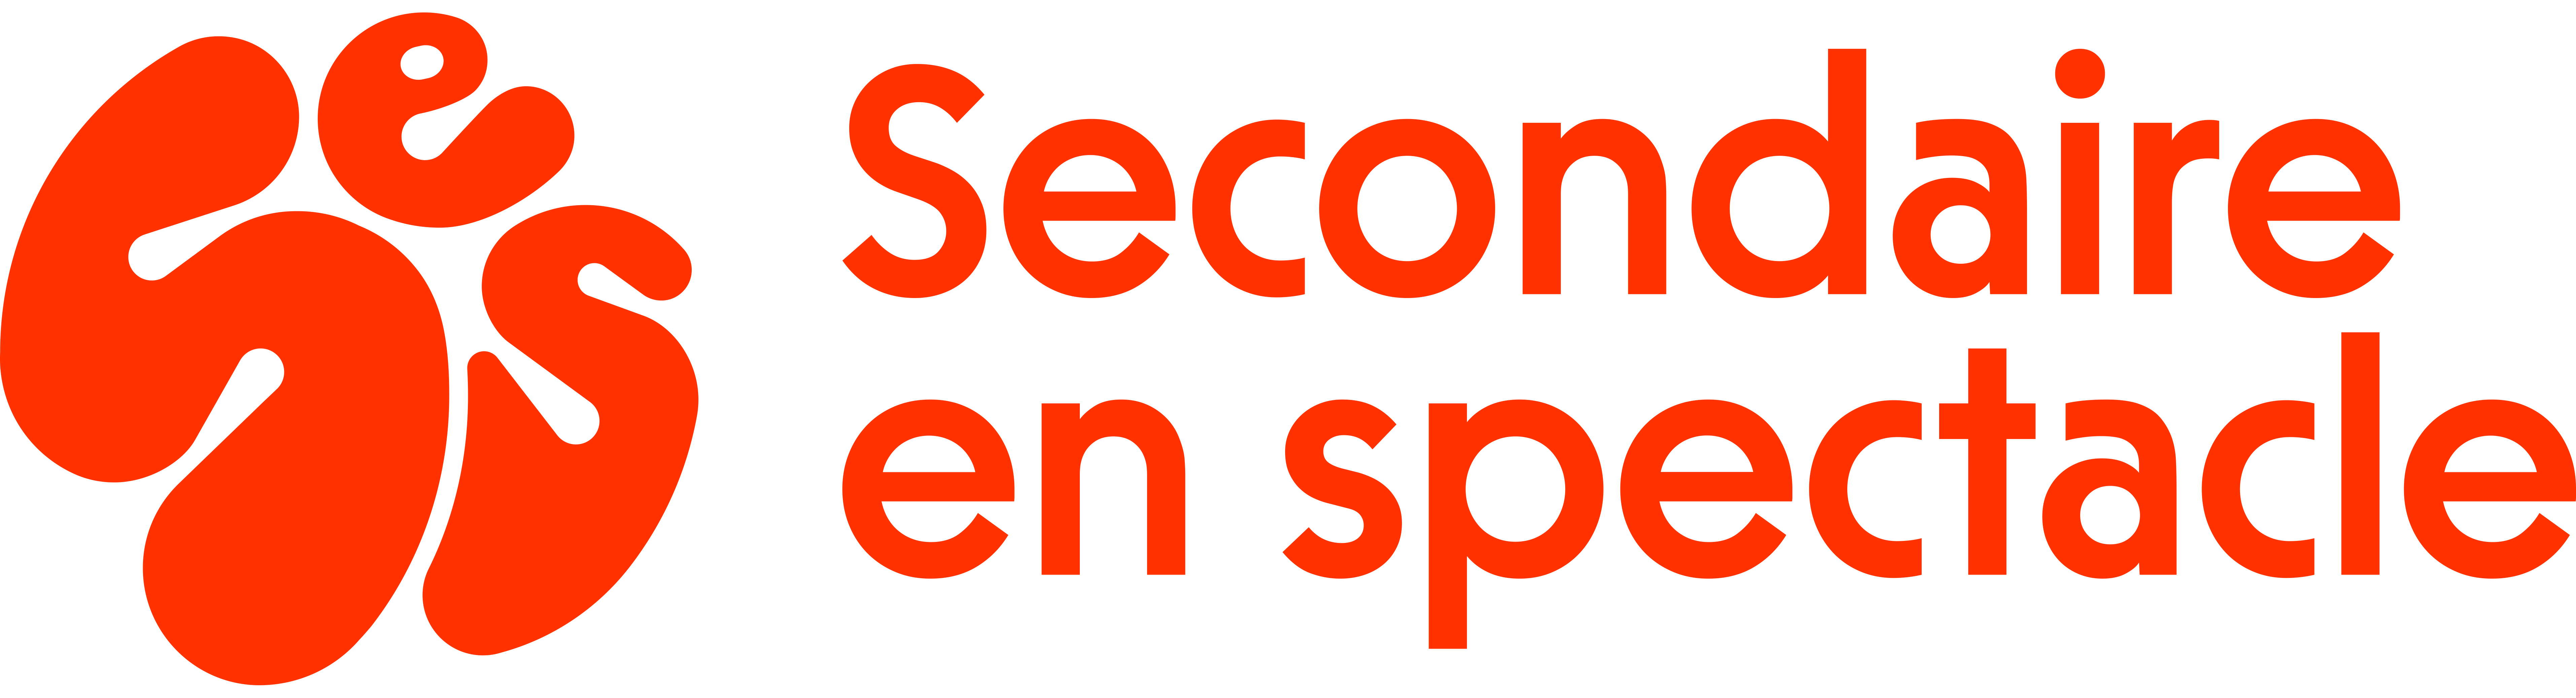 secondaire-en-spectacle-logo-horizontal-rvb